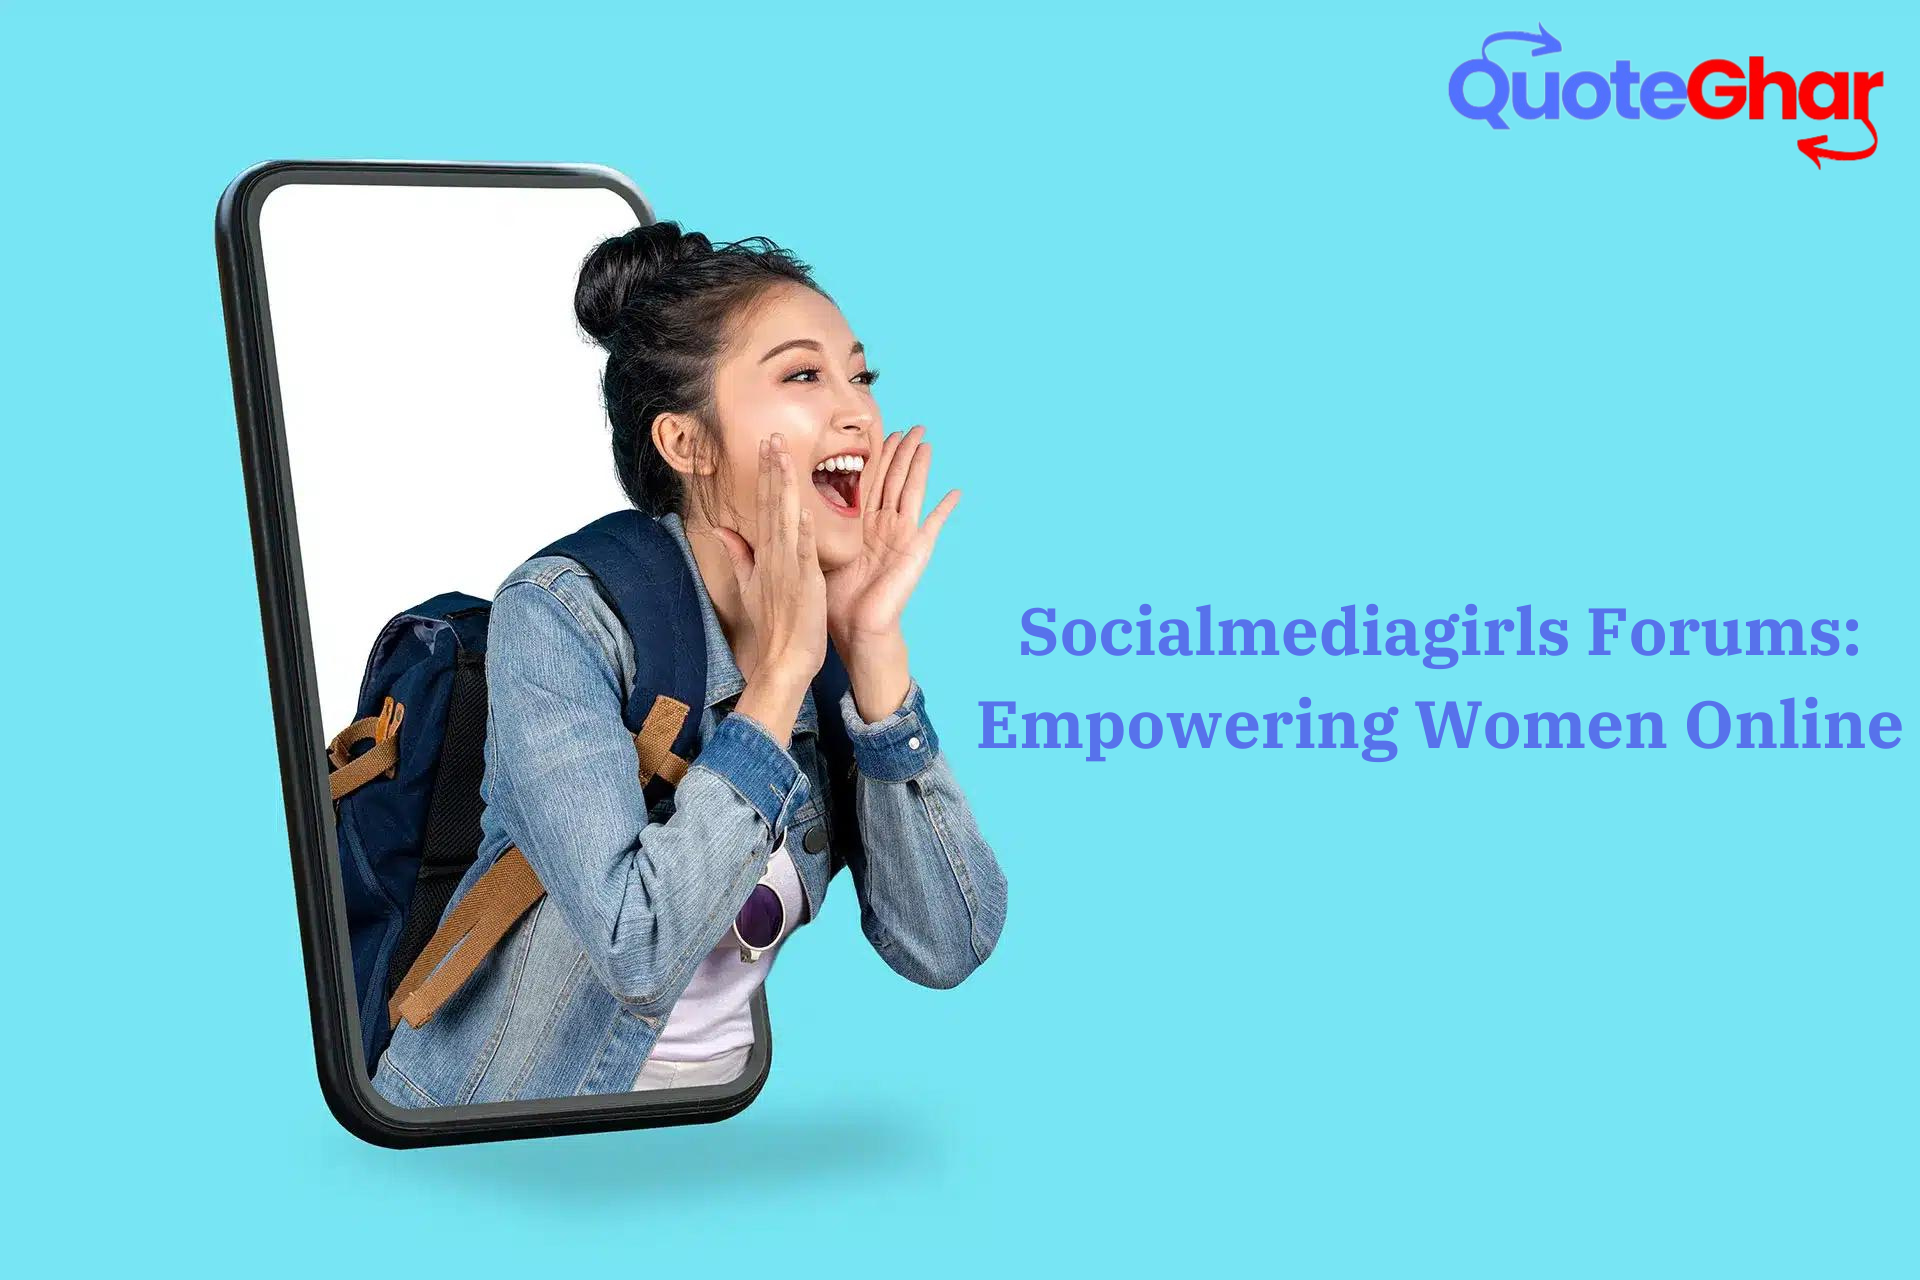 Socialmediagirls Forums: Empowering Women Online